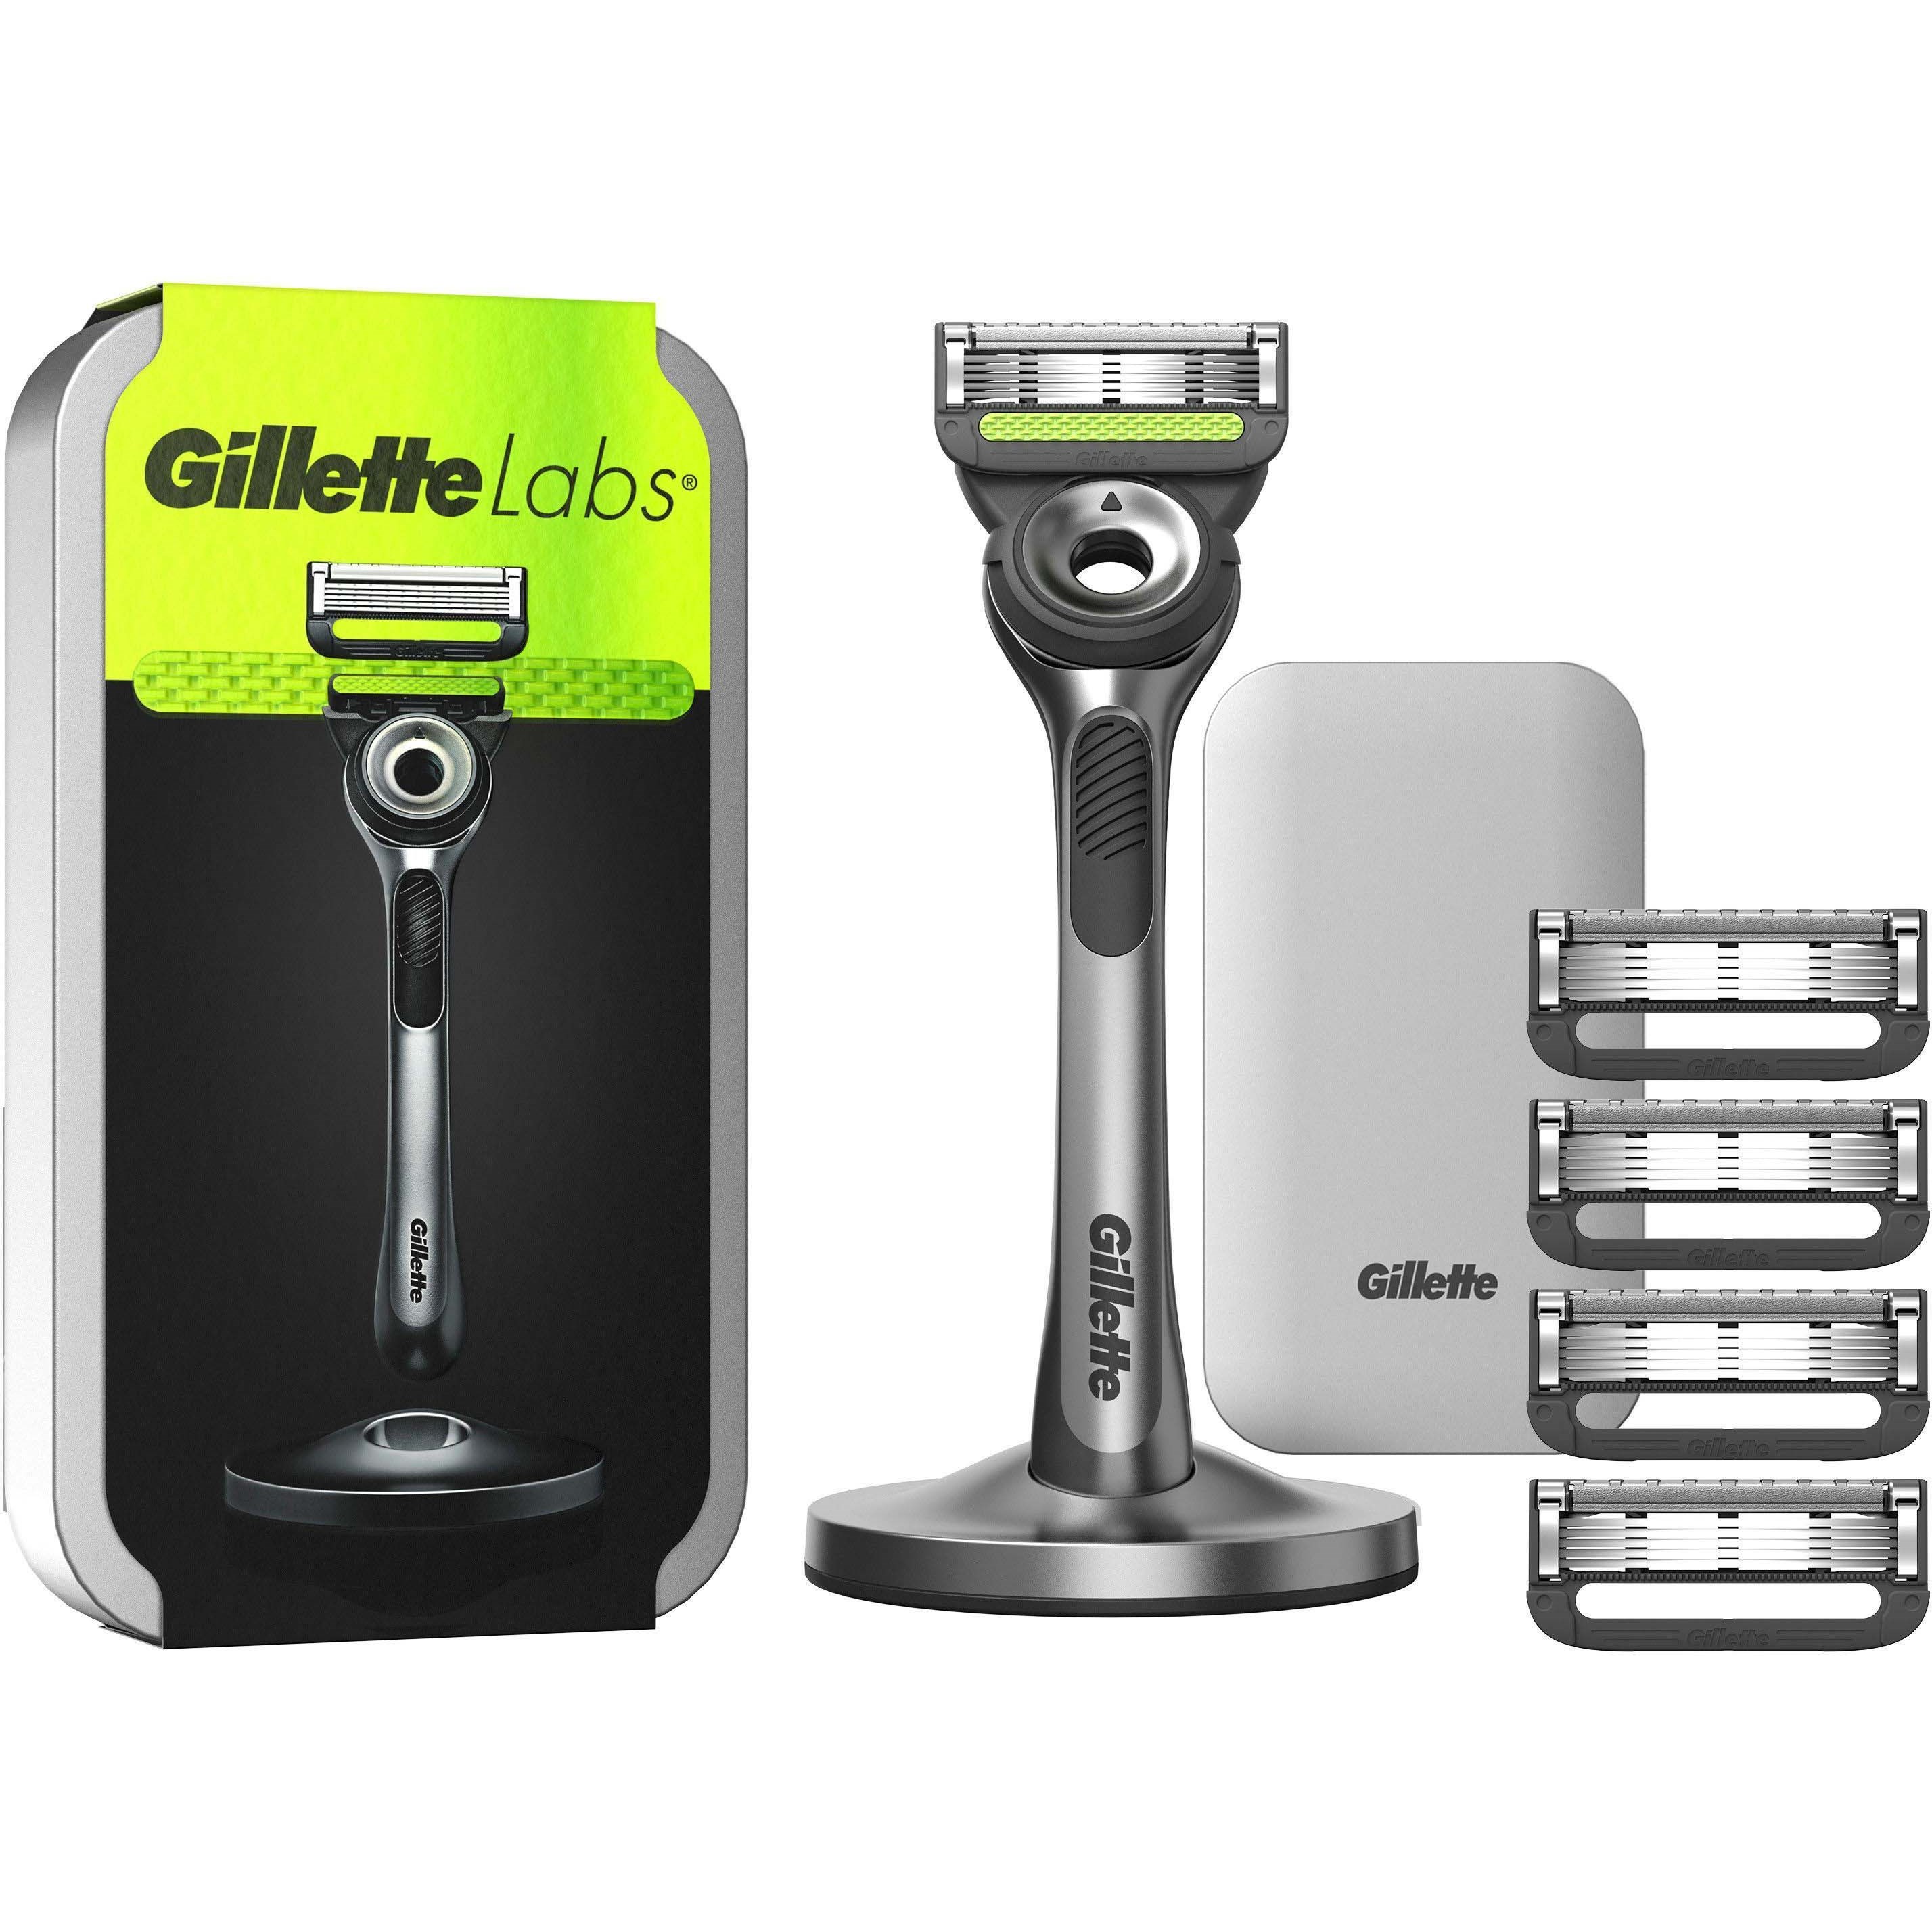 Gillette Labs Razor With Exfoliating Bar & Stand 5 Blades Travel Editi